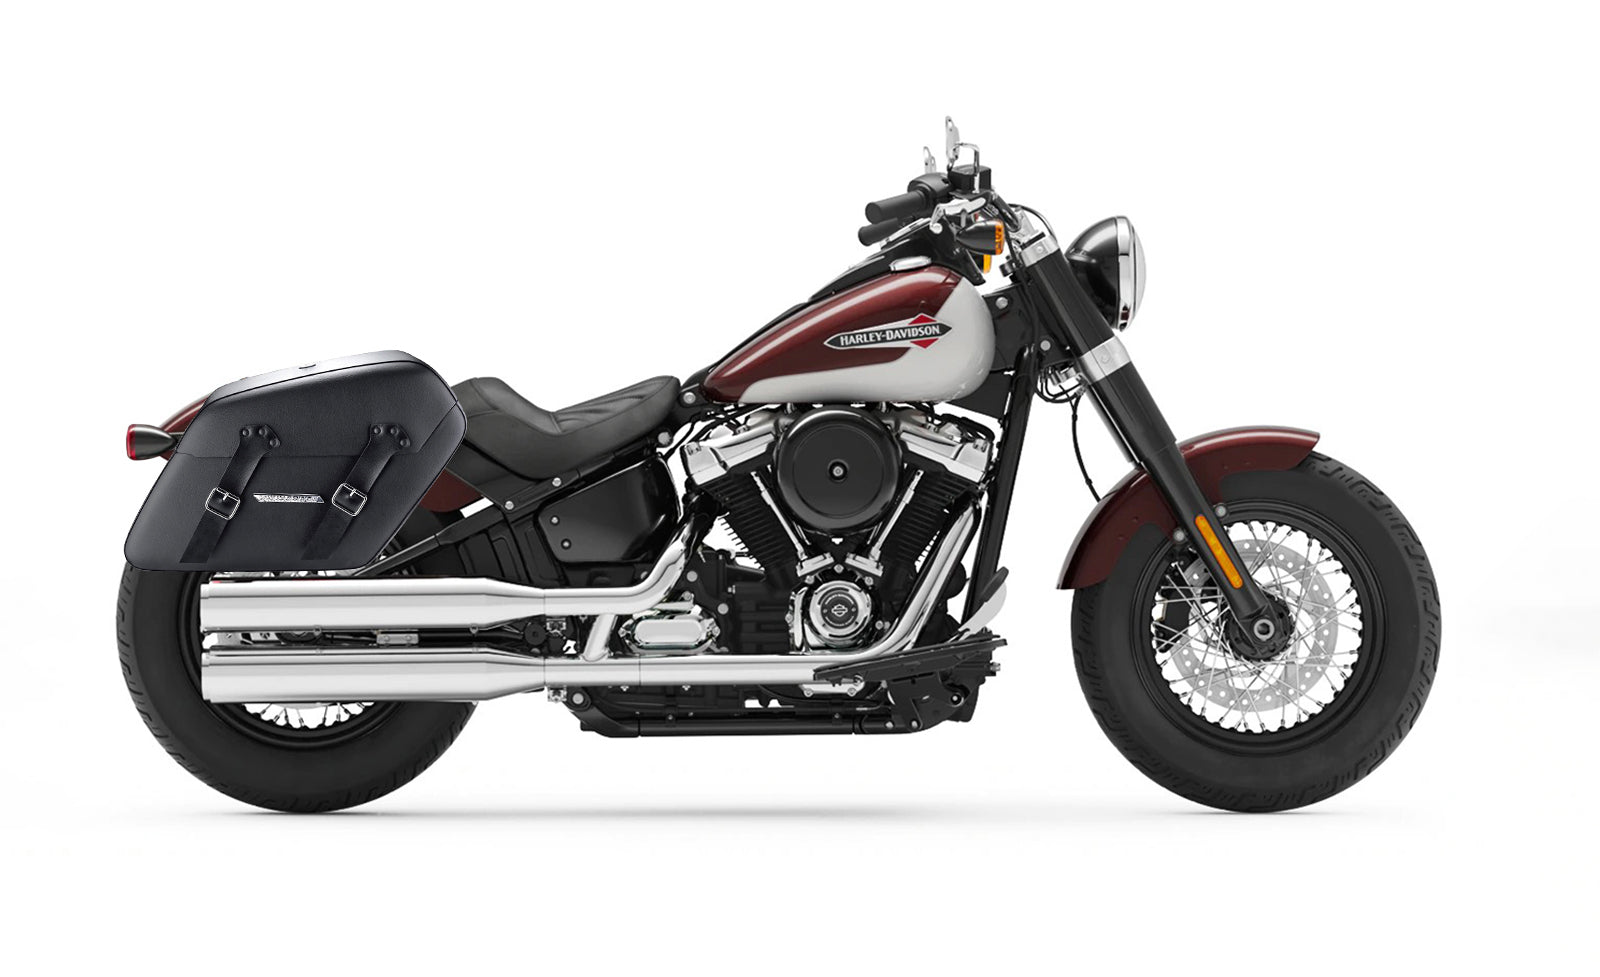 42L - Baldur Extra Large Leather Wrapped Hard Saddlebags for Harley Softail Slim FLSL on Bike Photo @expand